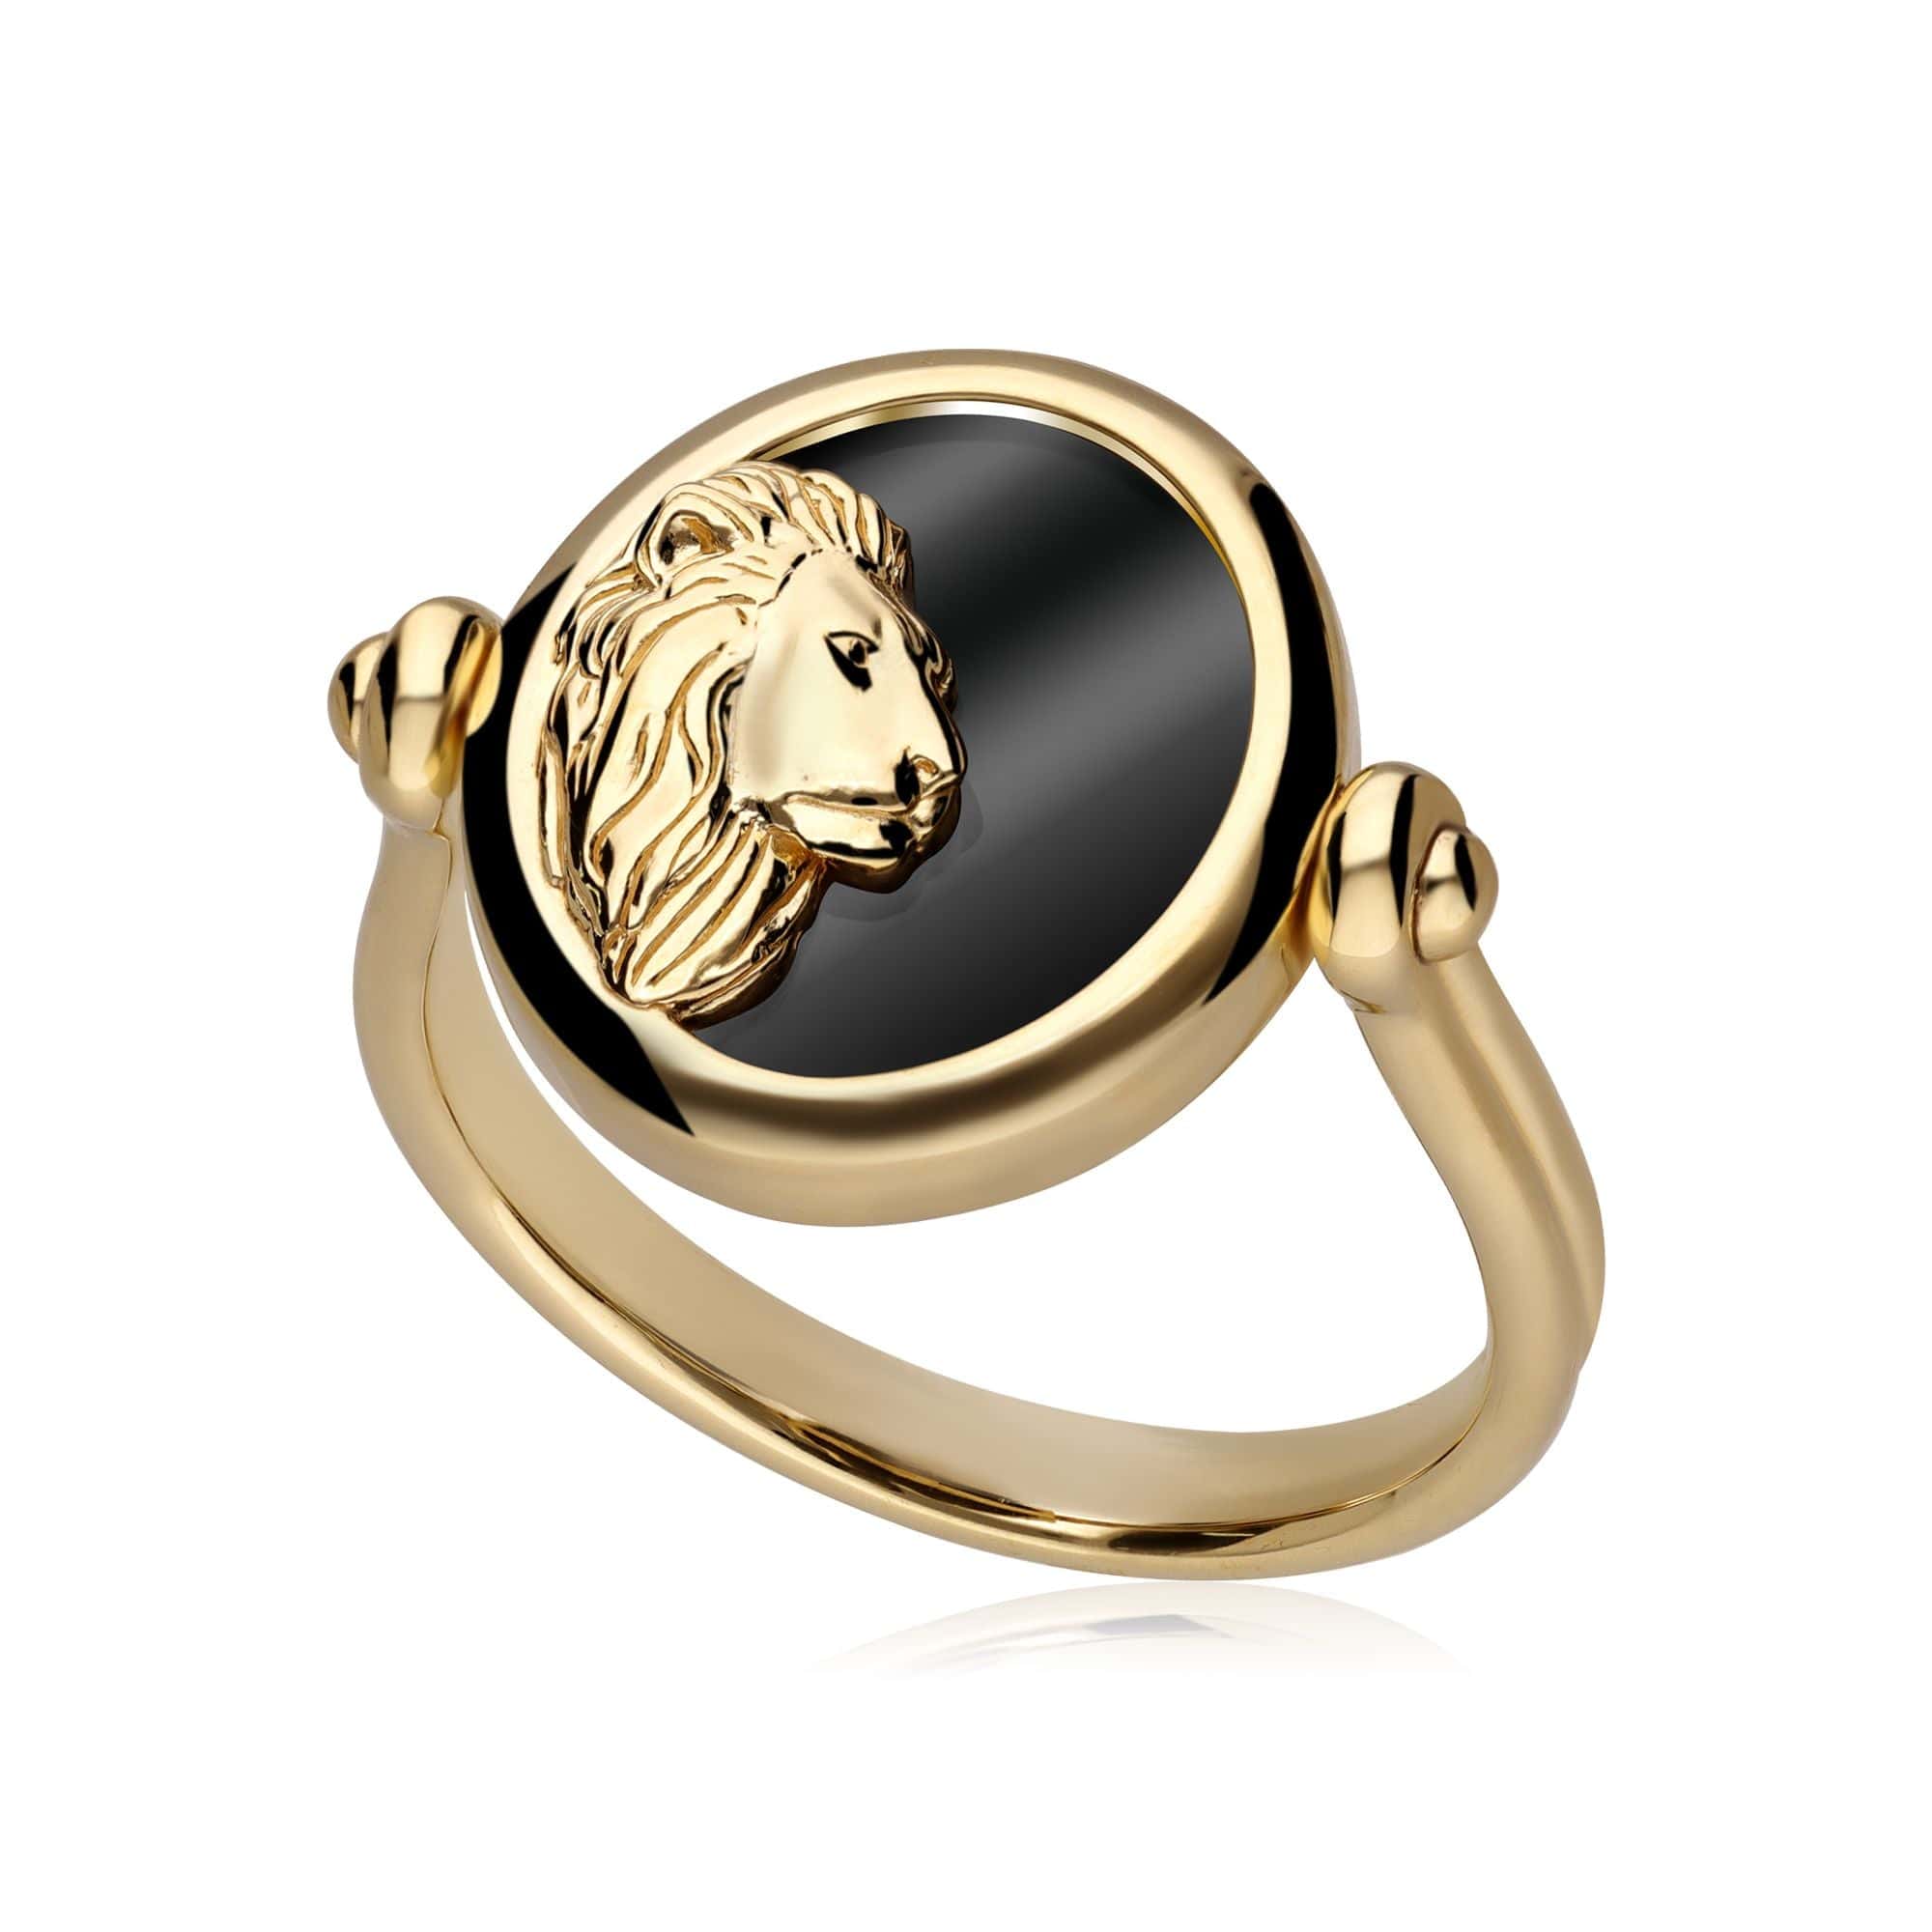 Zodiac Black Onyx Leo Flip Ring in 18ct Gold Plated Silver - Gemondo